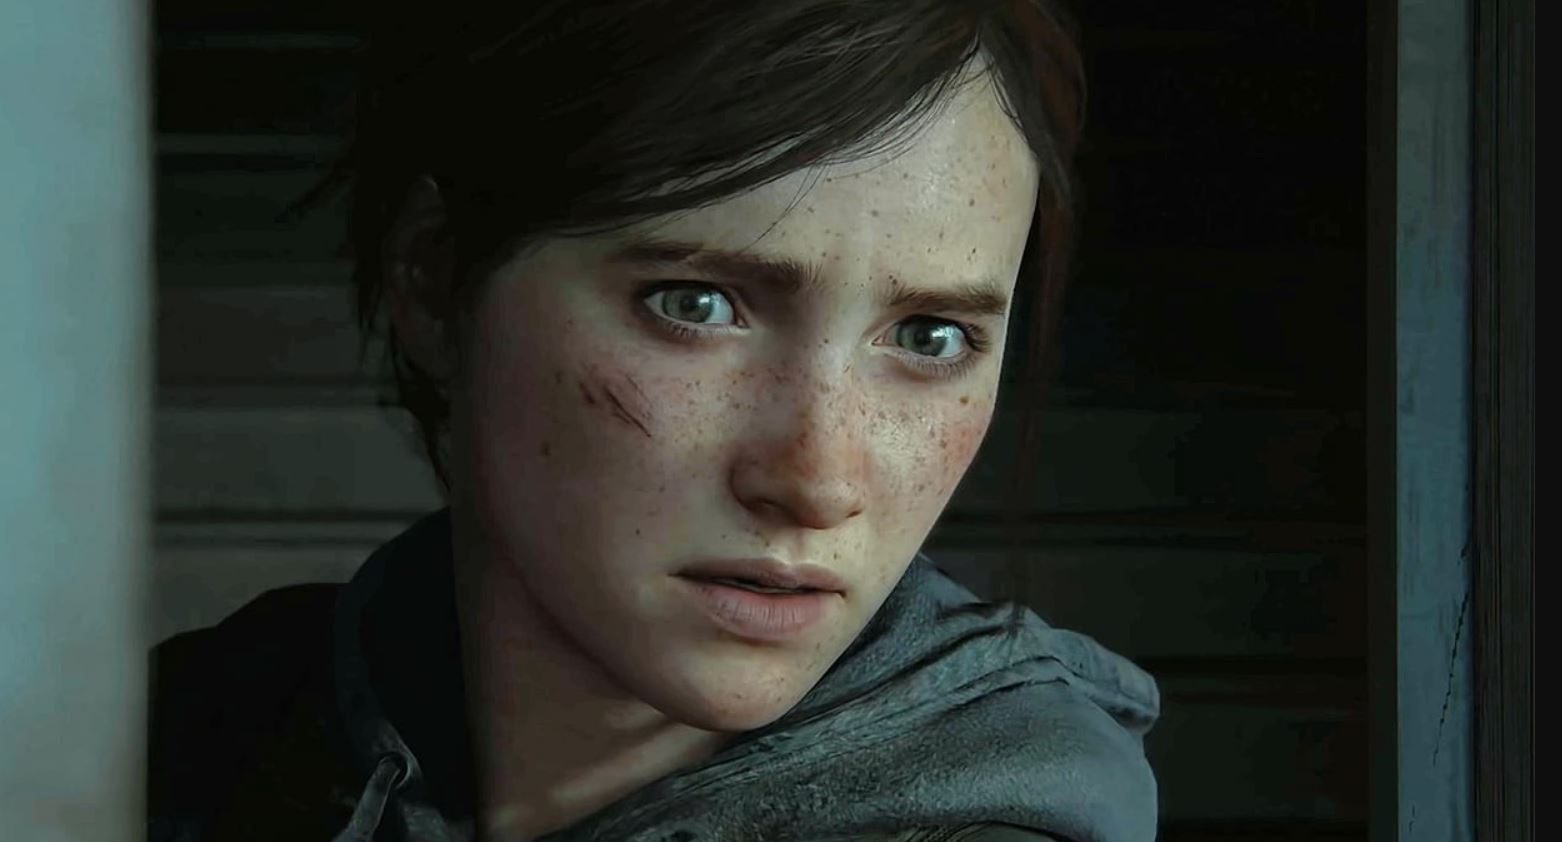 The Last of Us Part 2 Download Is 100GB Minimum - IGN